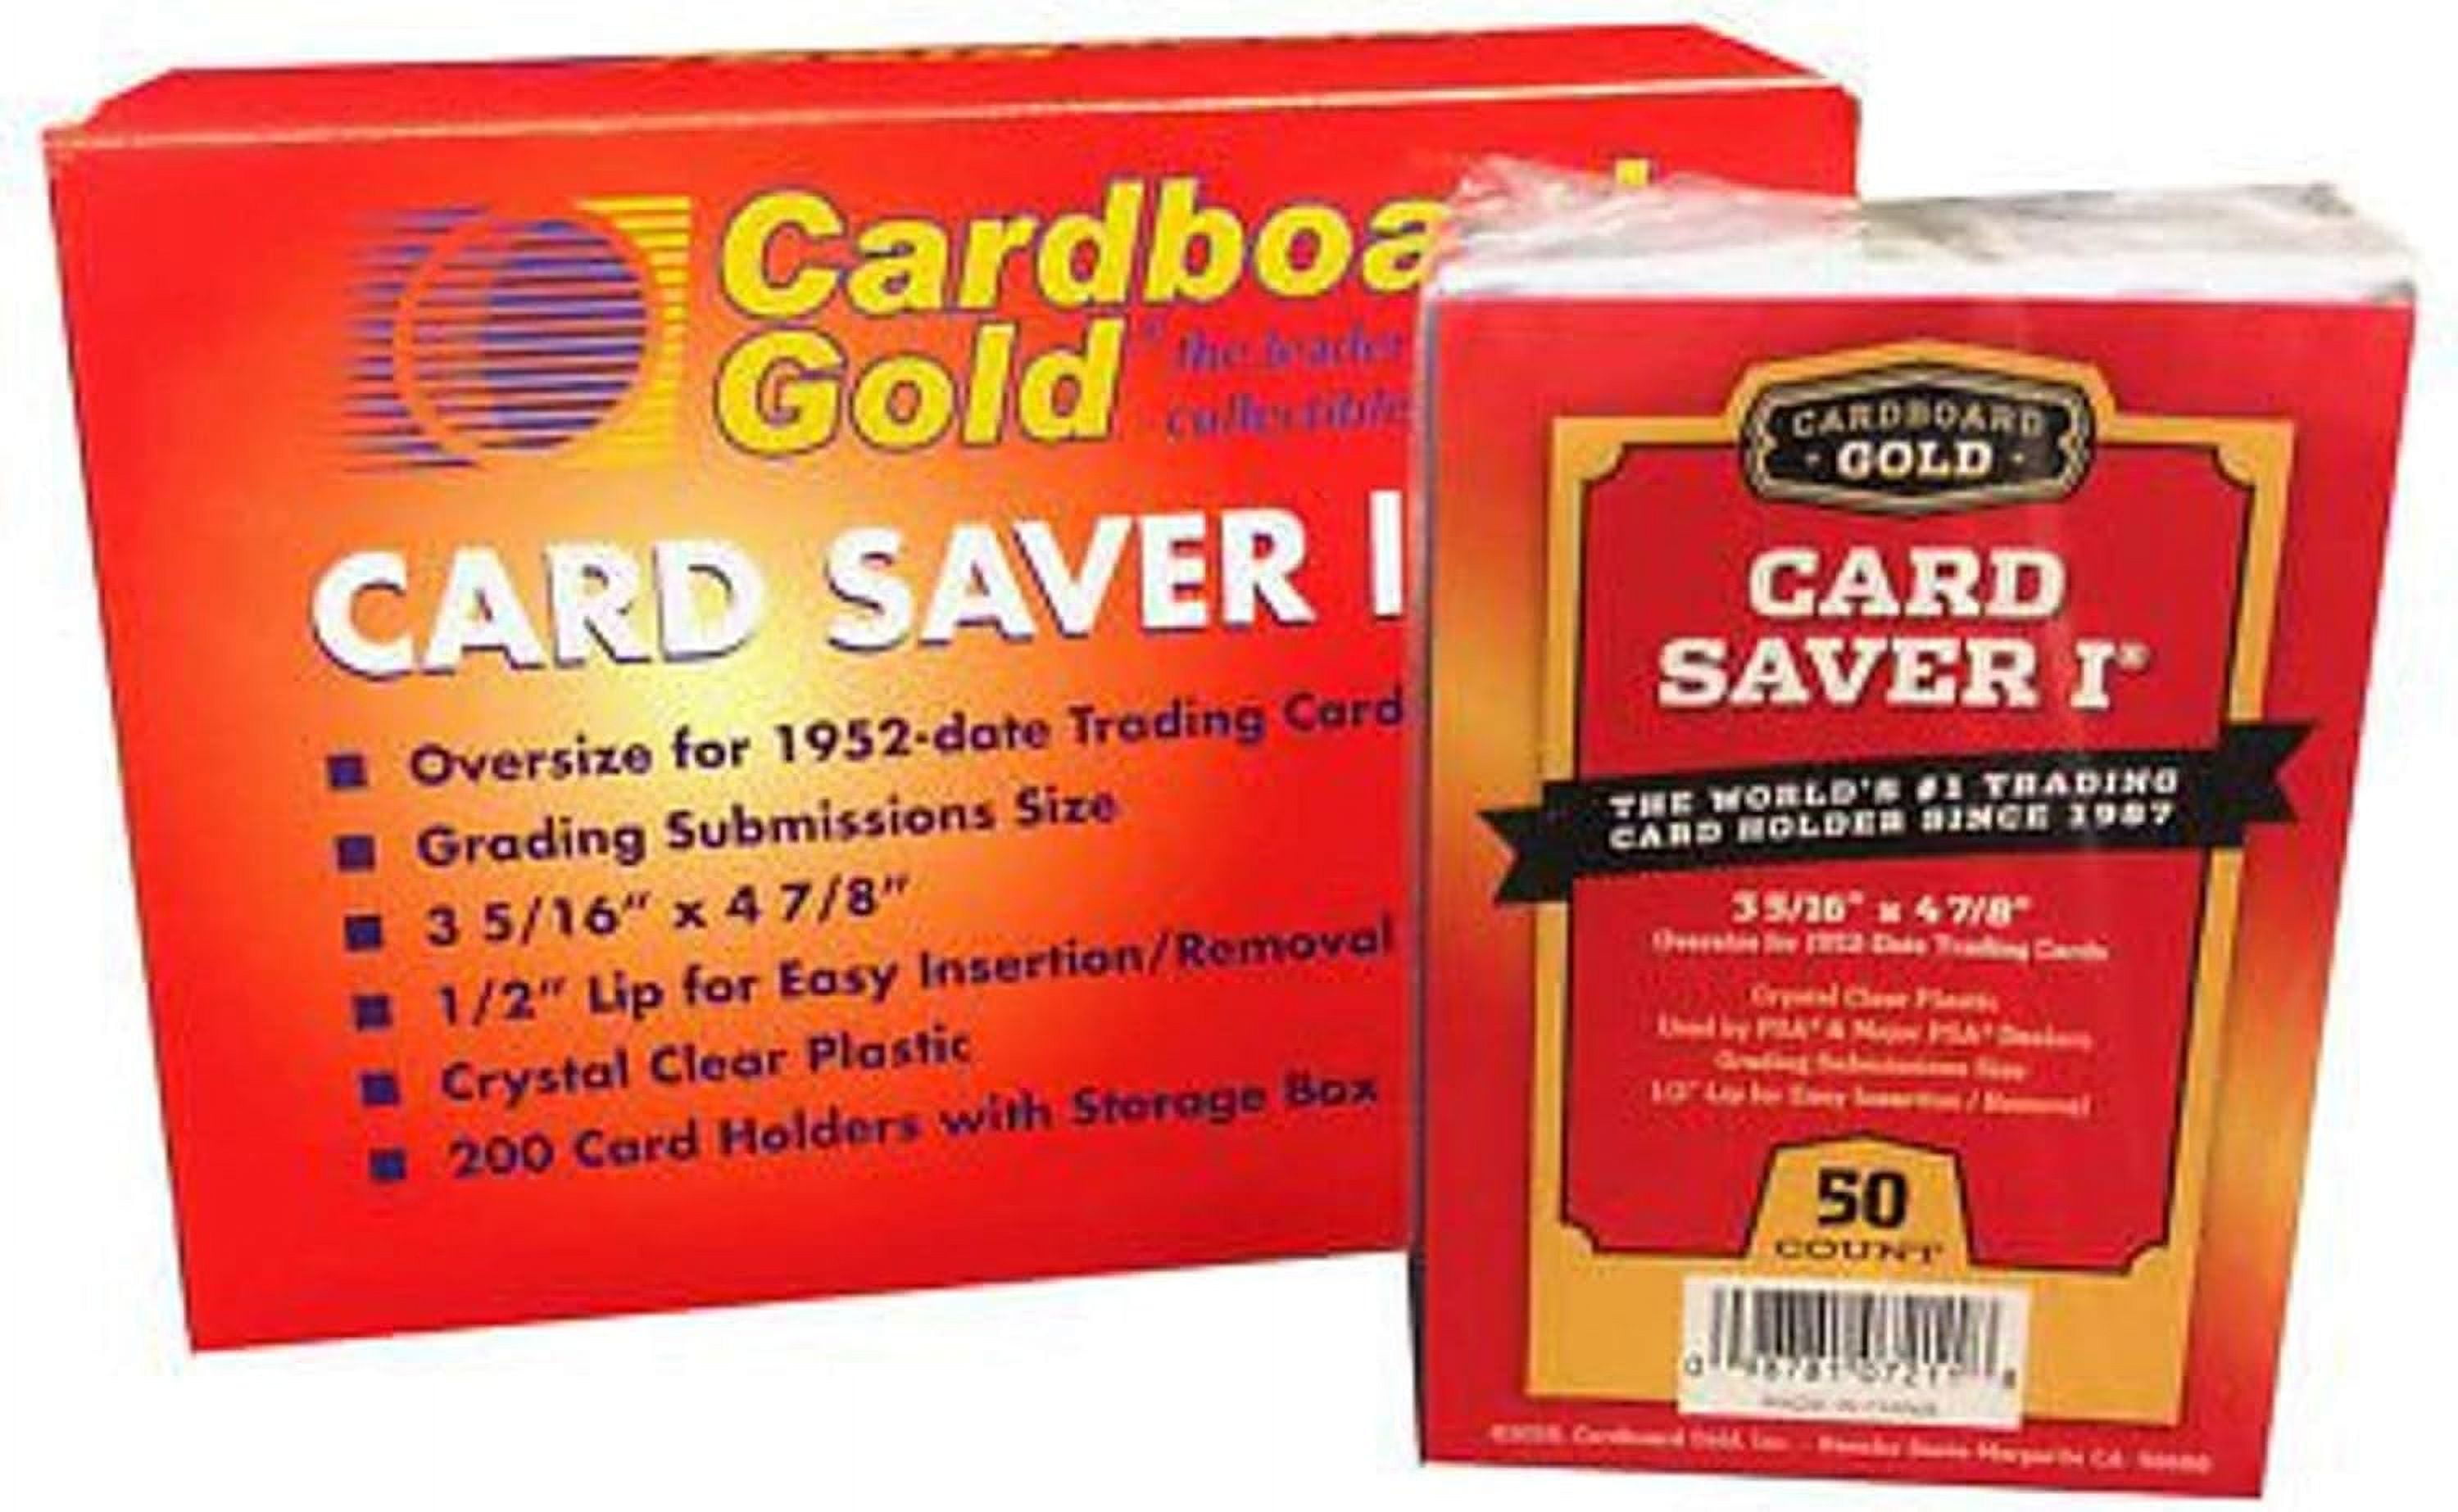 Cardboard Gold CBG-72217-C Card Saver 1 Semi-Rigid Trading Card Holders, 1  Pack Box Of 200 